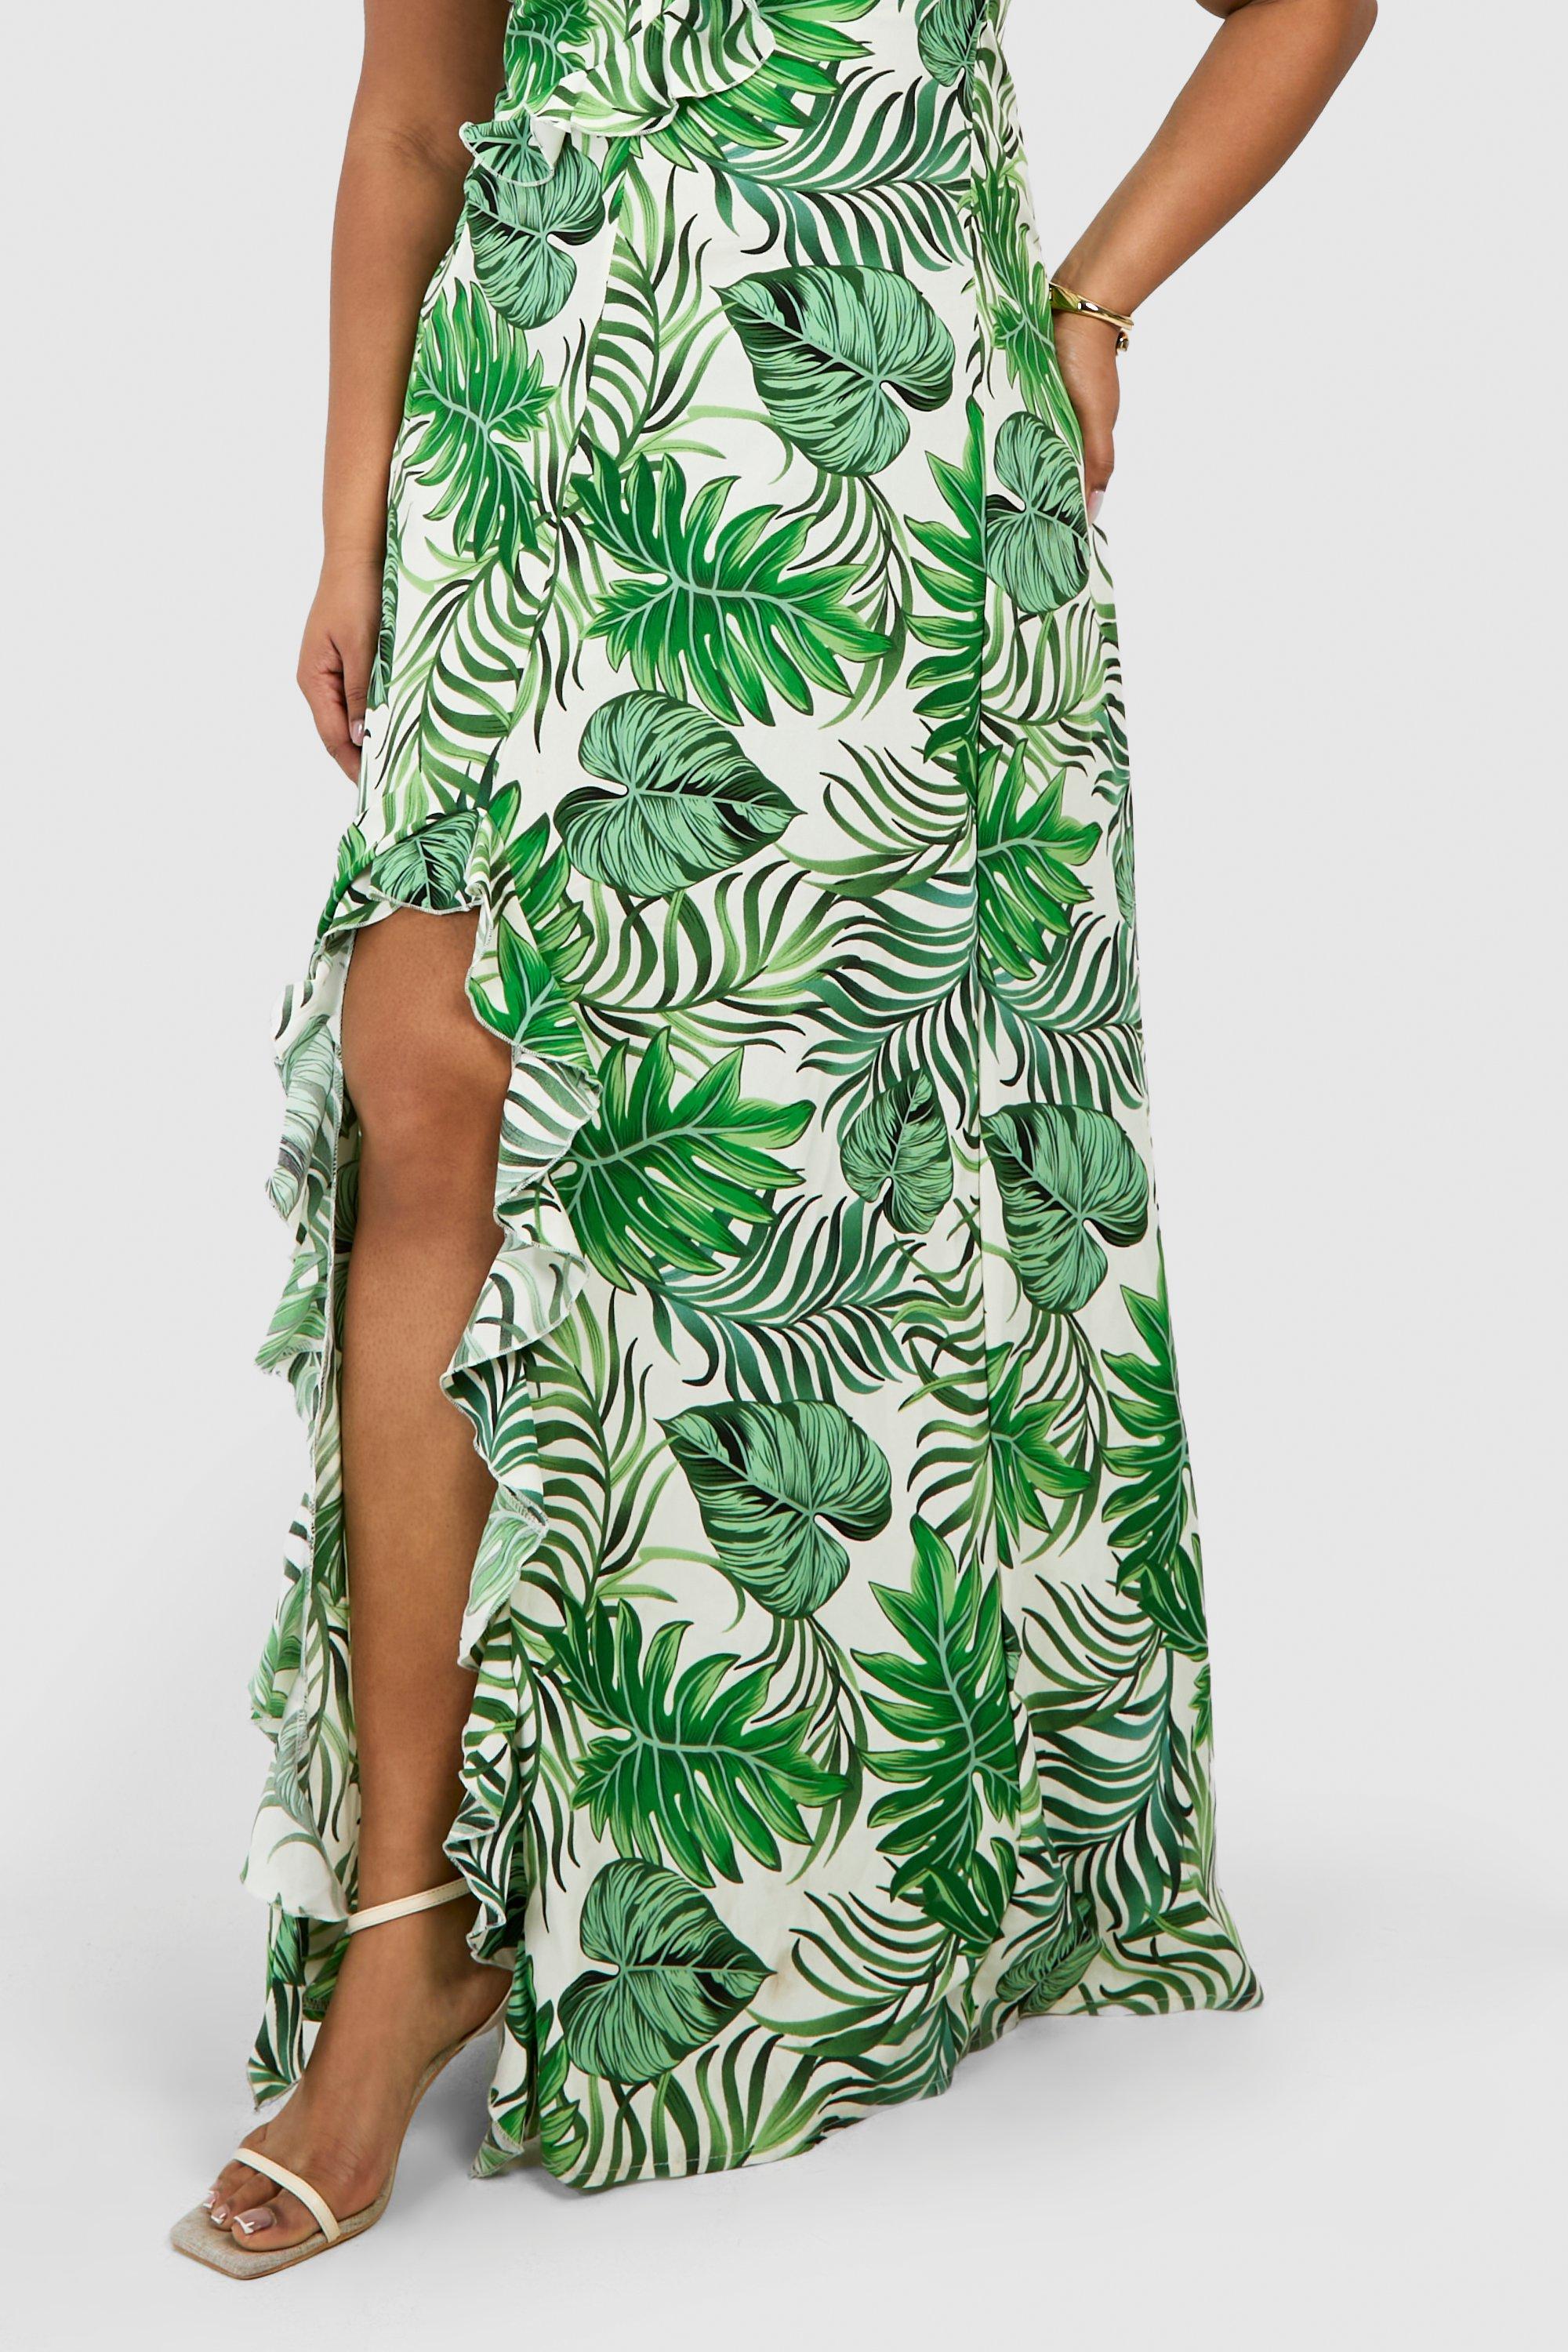 hawaiian dress for plus size